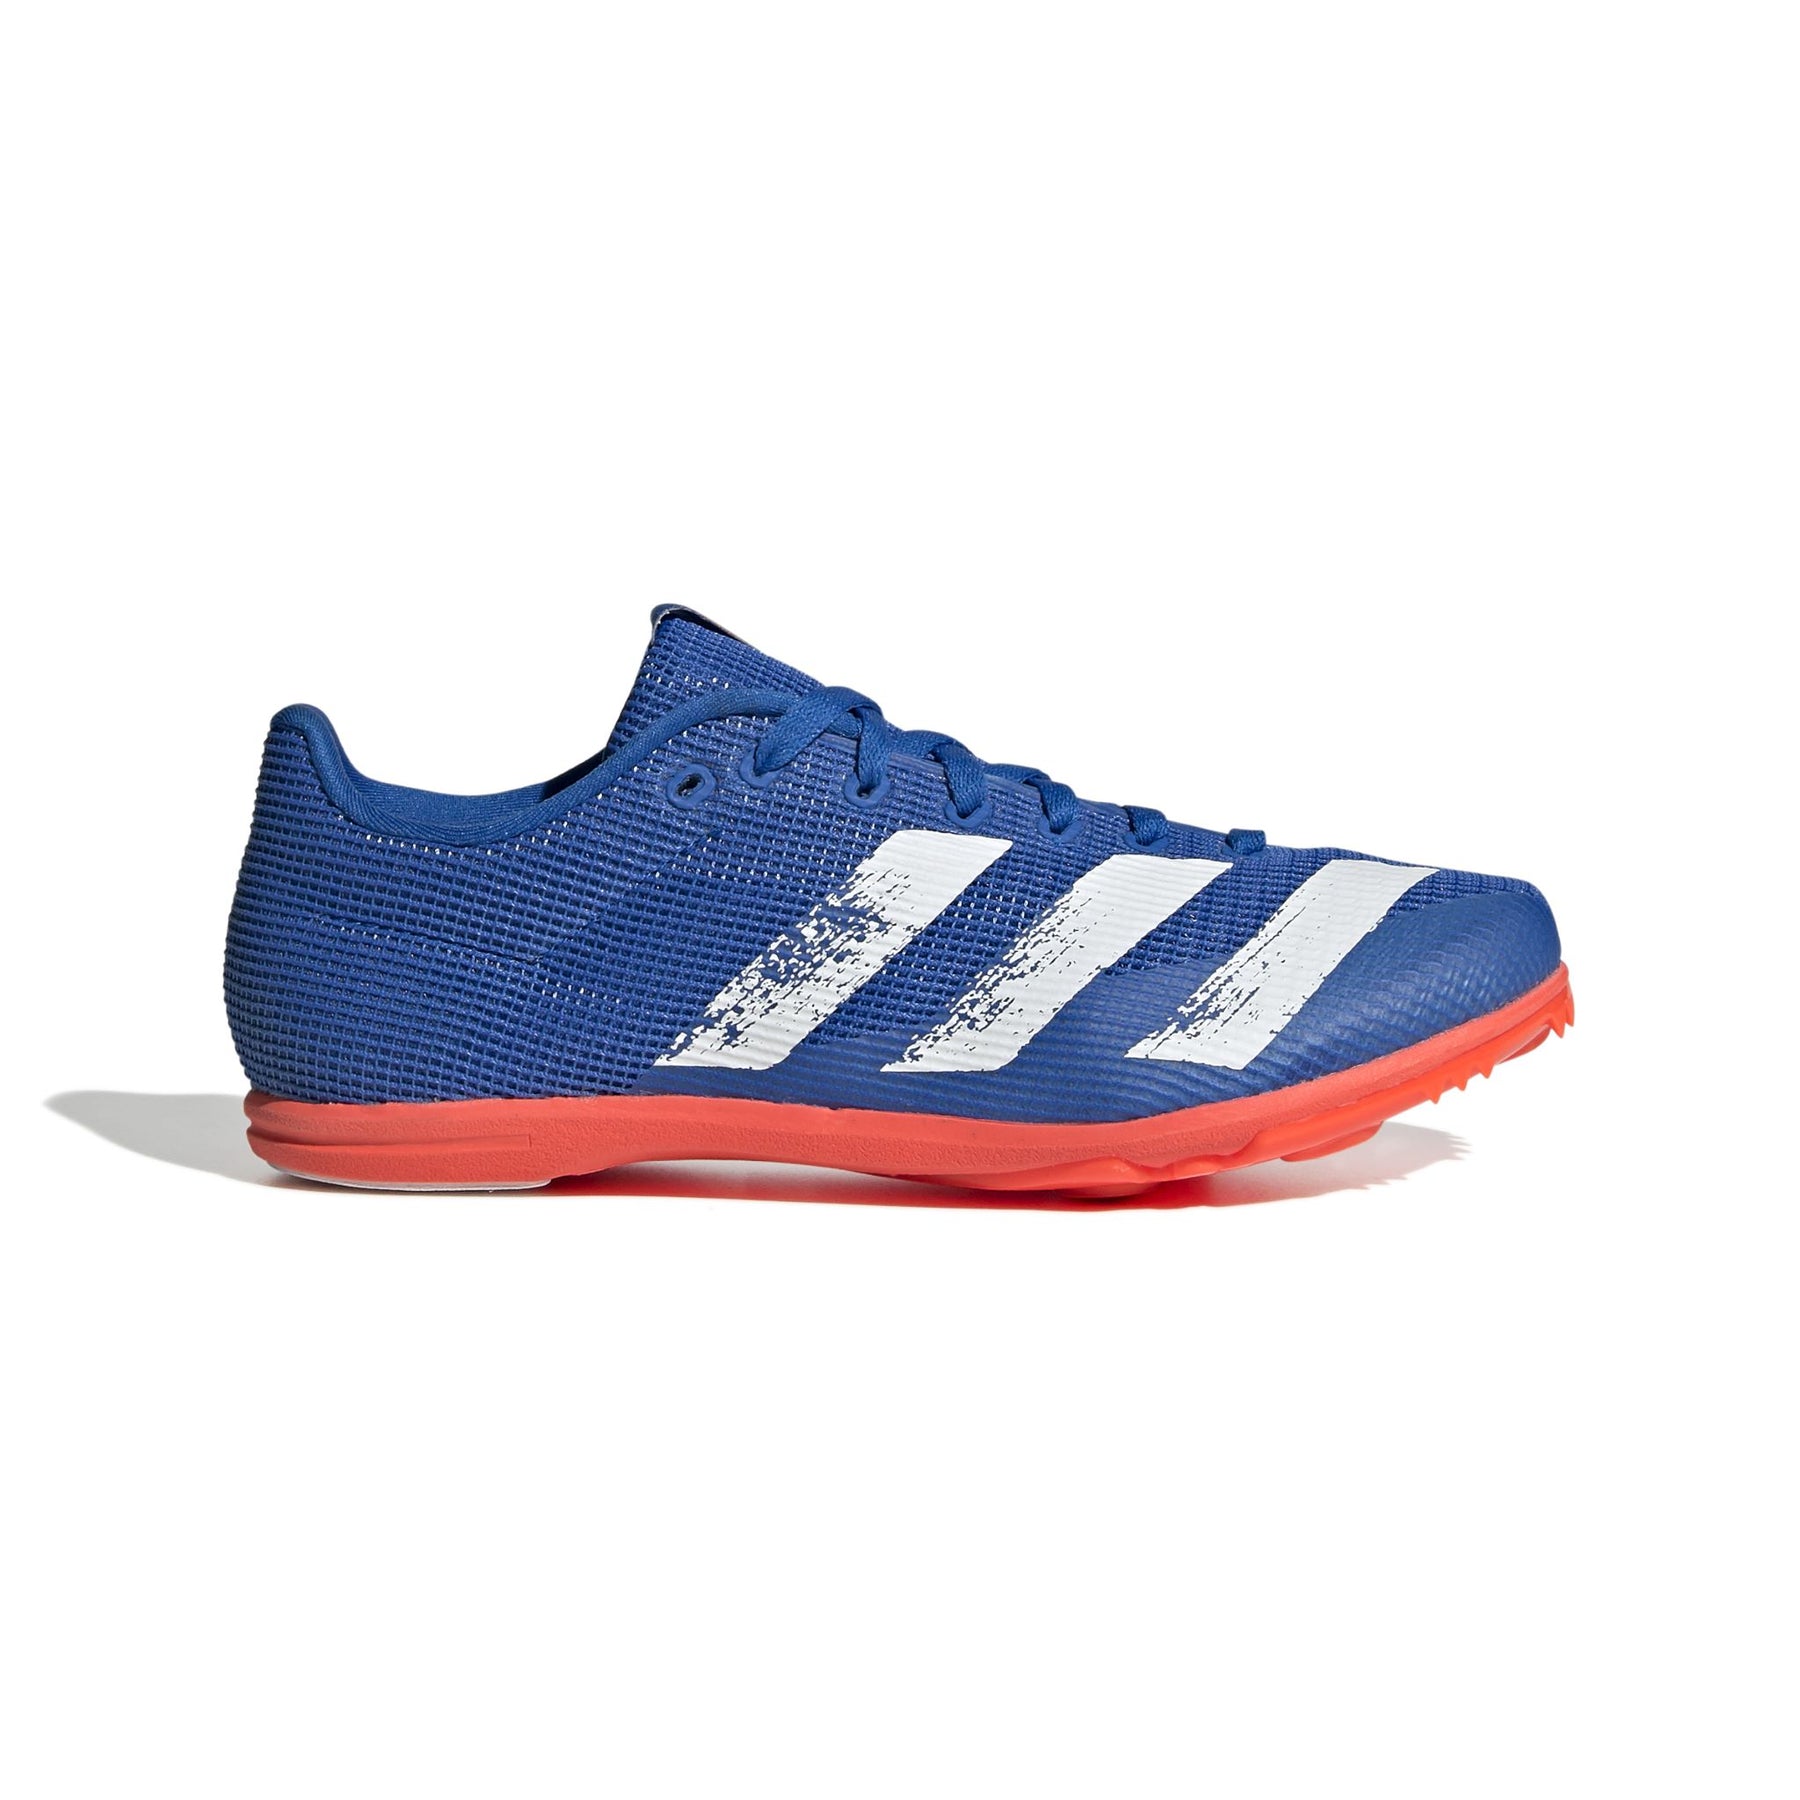 Adidas Allroundstar Kids Running Spikes: Blue